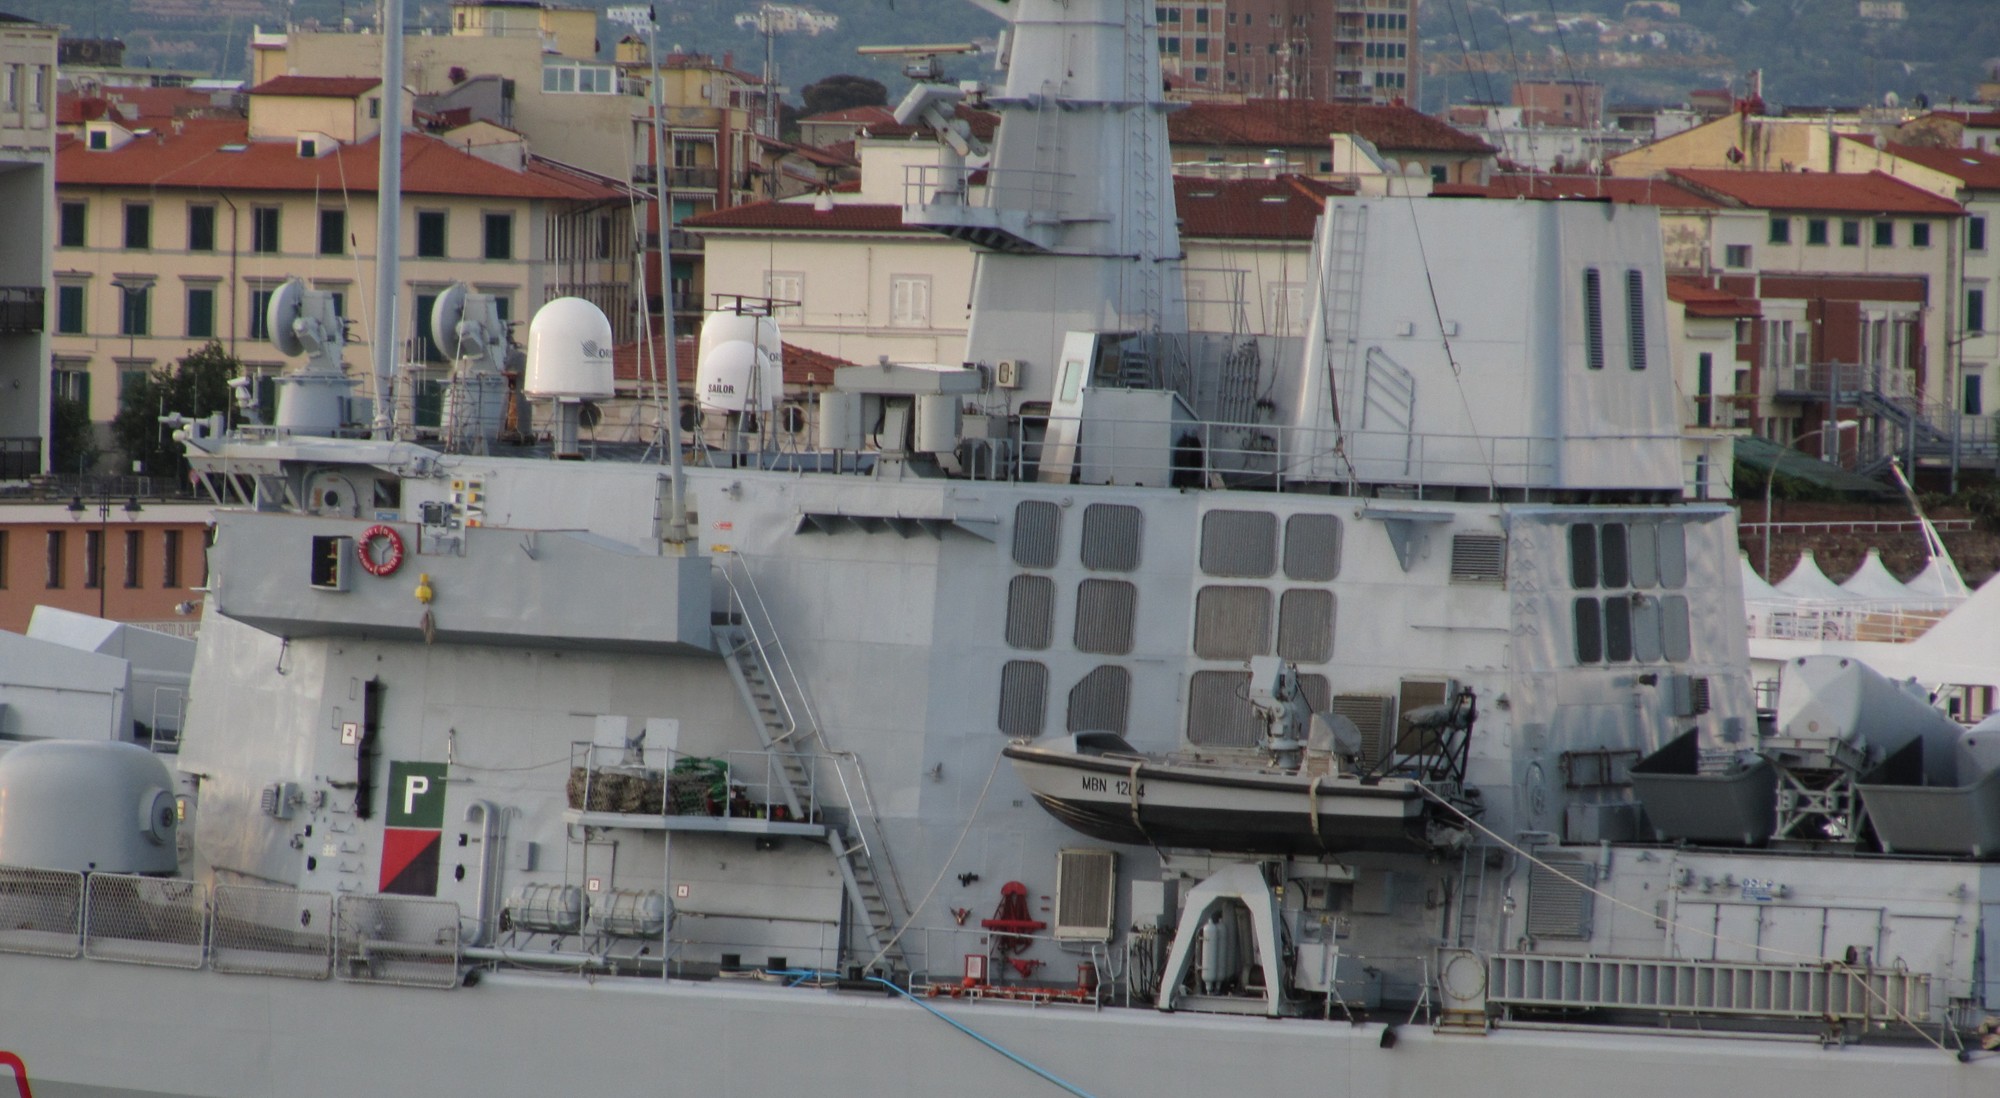 d-560 luigi durand de la penne its nave guided missile destroyer ddg italian navy marina militare 77